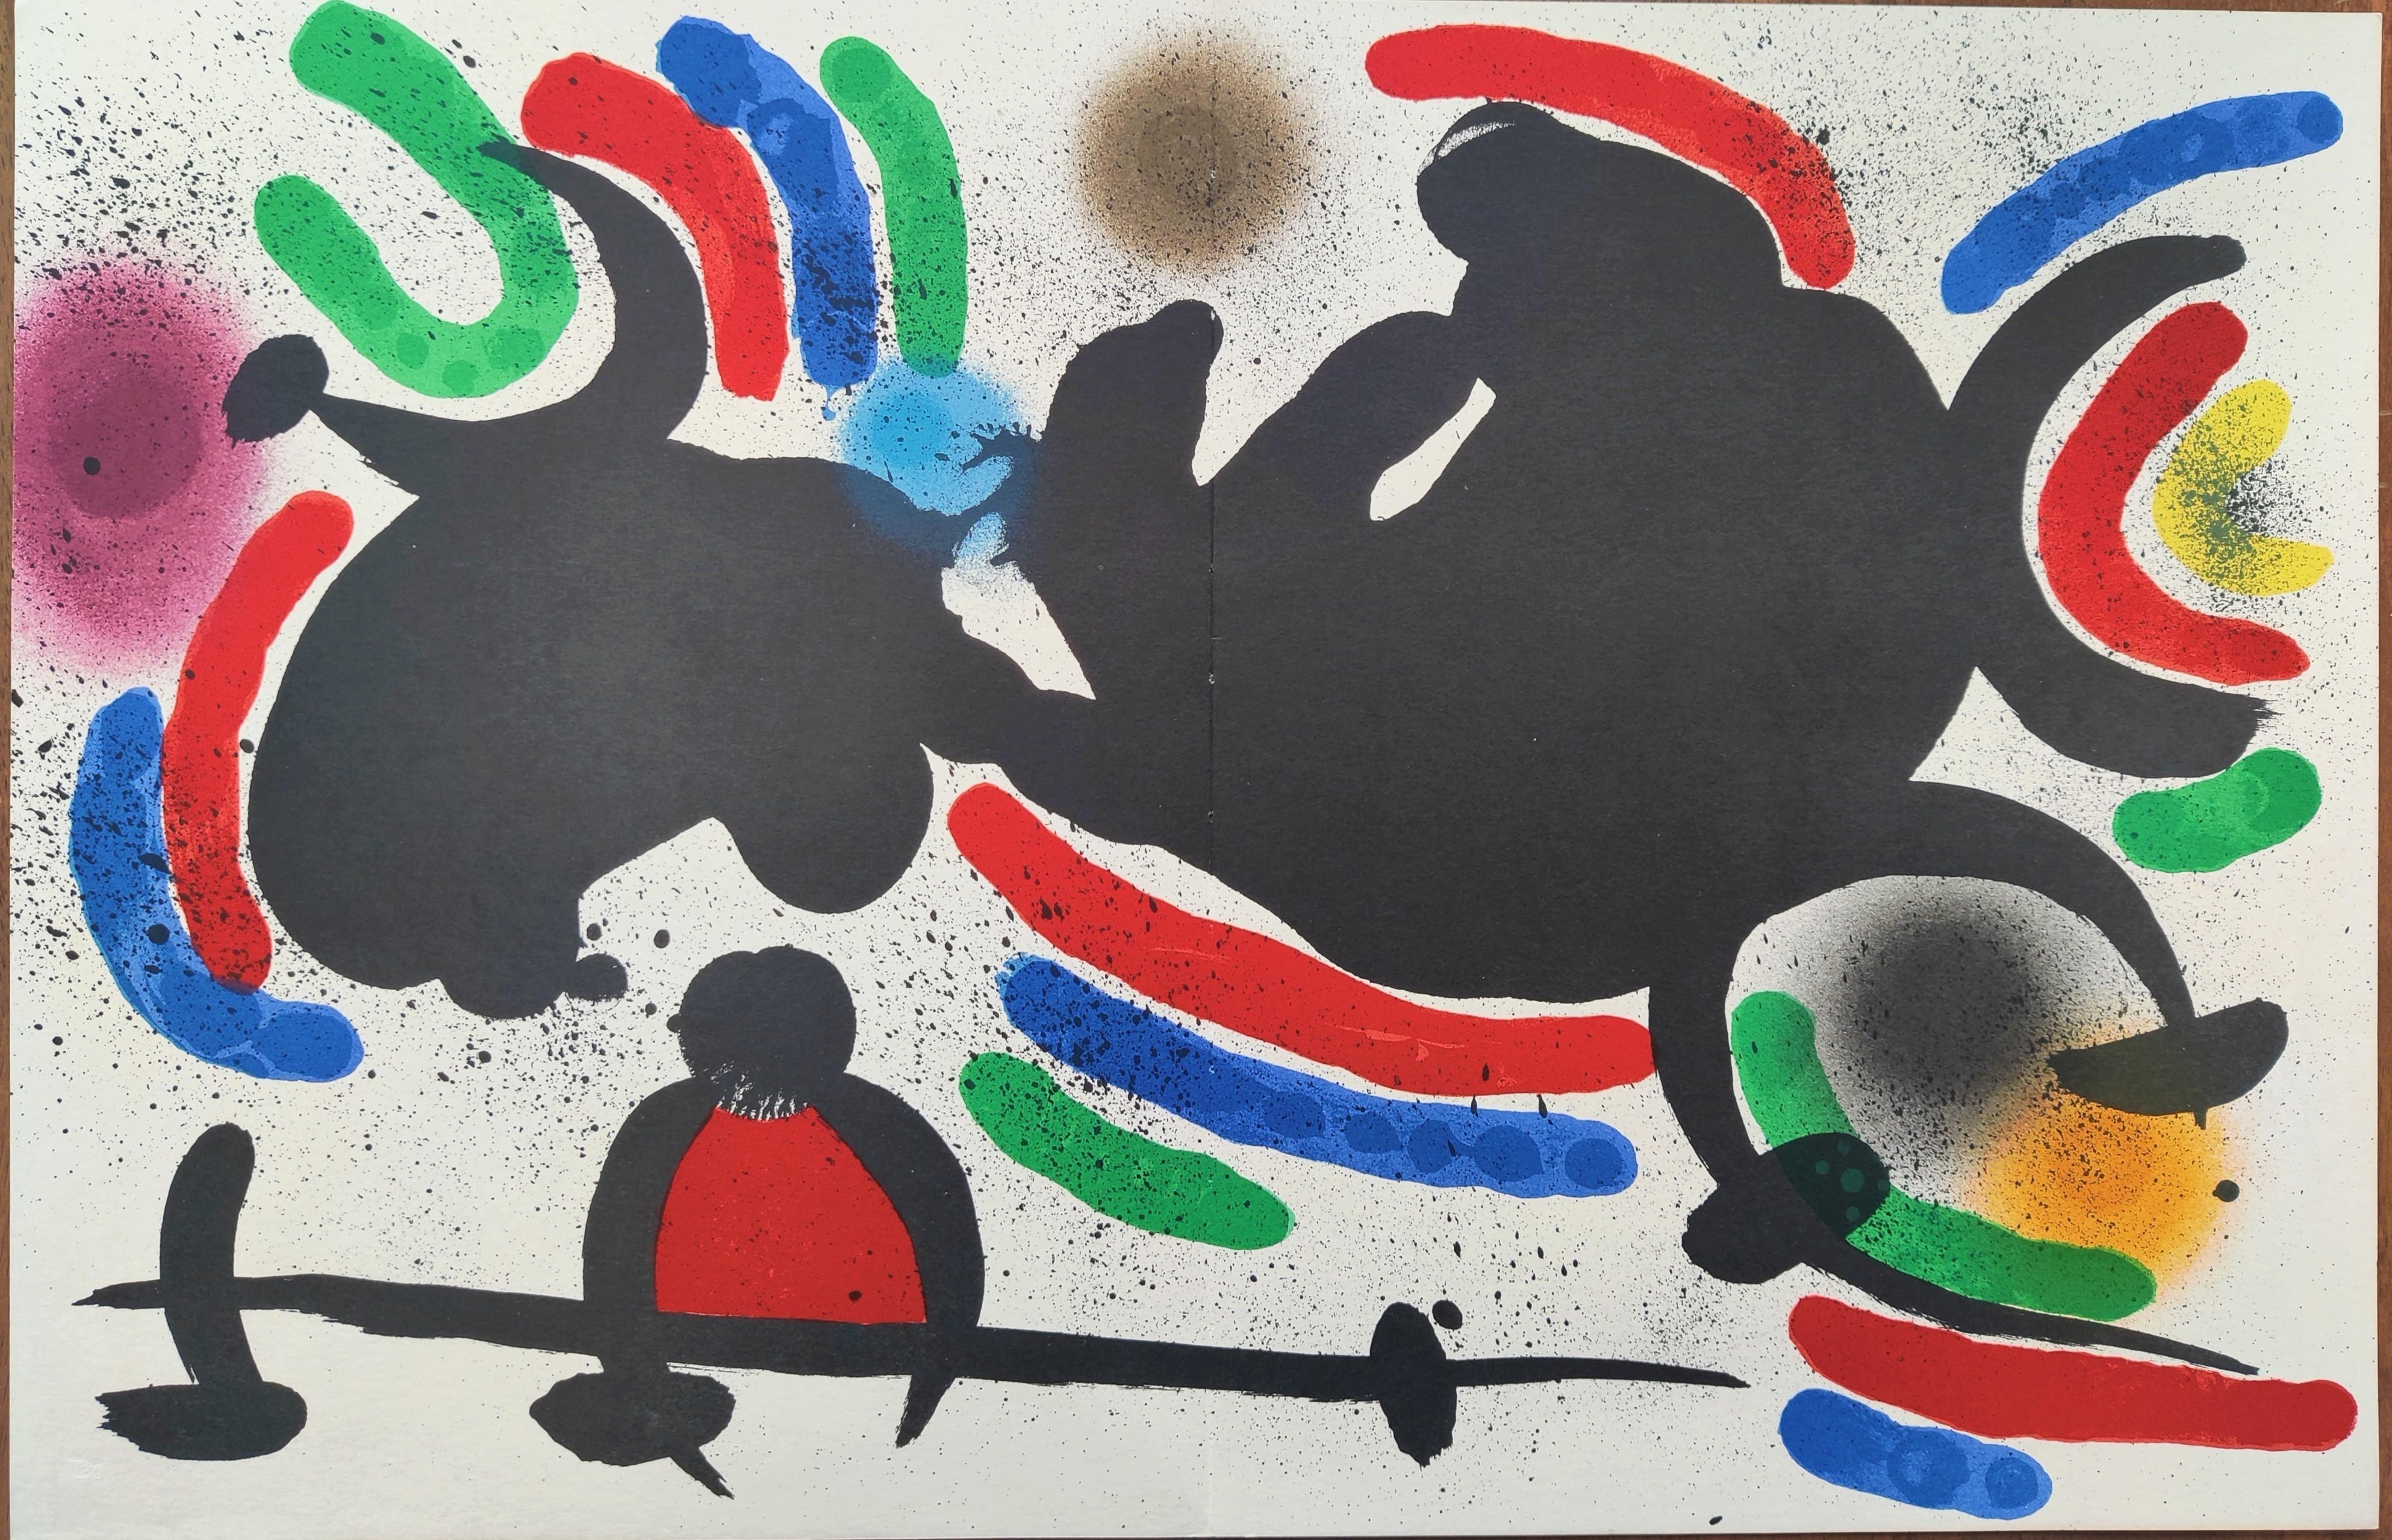 Joan Miró --  Lithograph I, Plate IV, 1972
Color Lithograph
Publisher: Ediciones Poligrafa, S.A., Barcelona
Catalogue: Mourlot 866
Size: 42.5 × 60 cm 
Unsigned